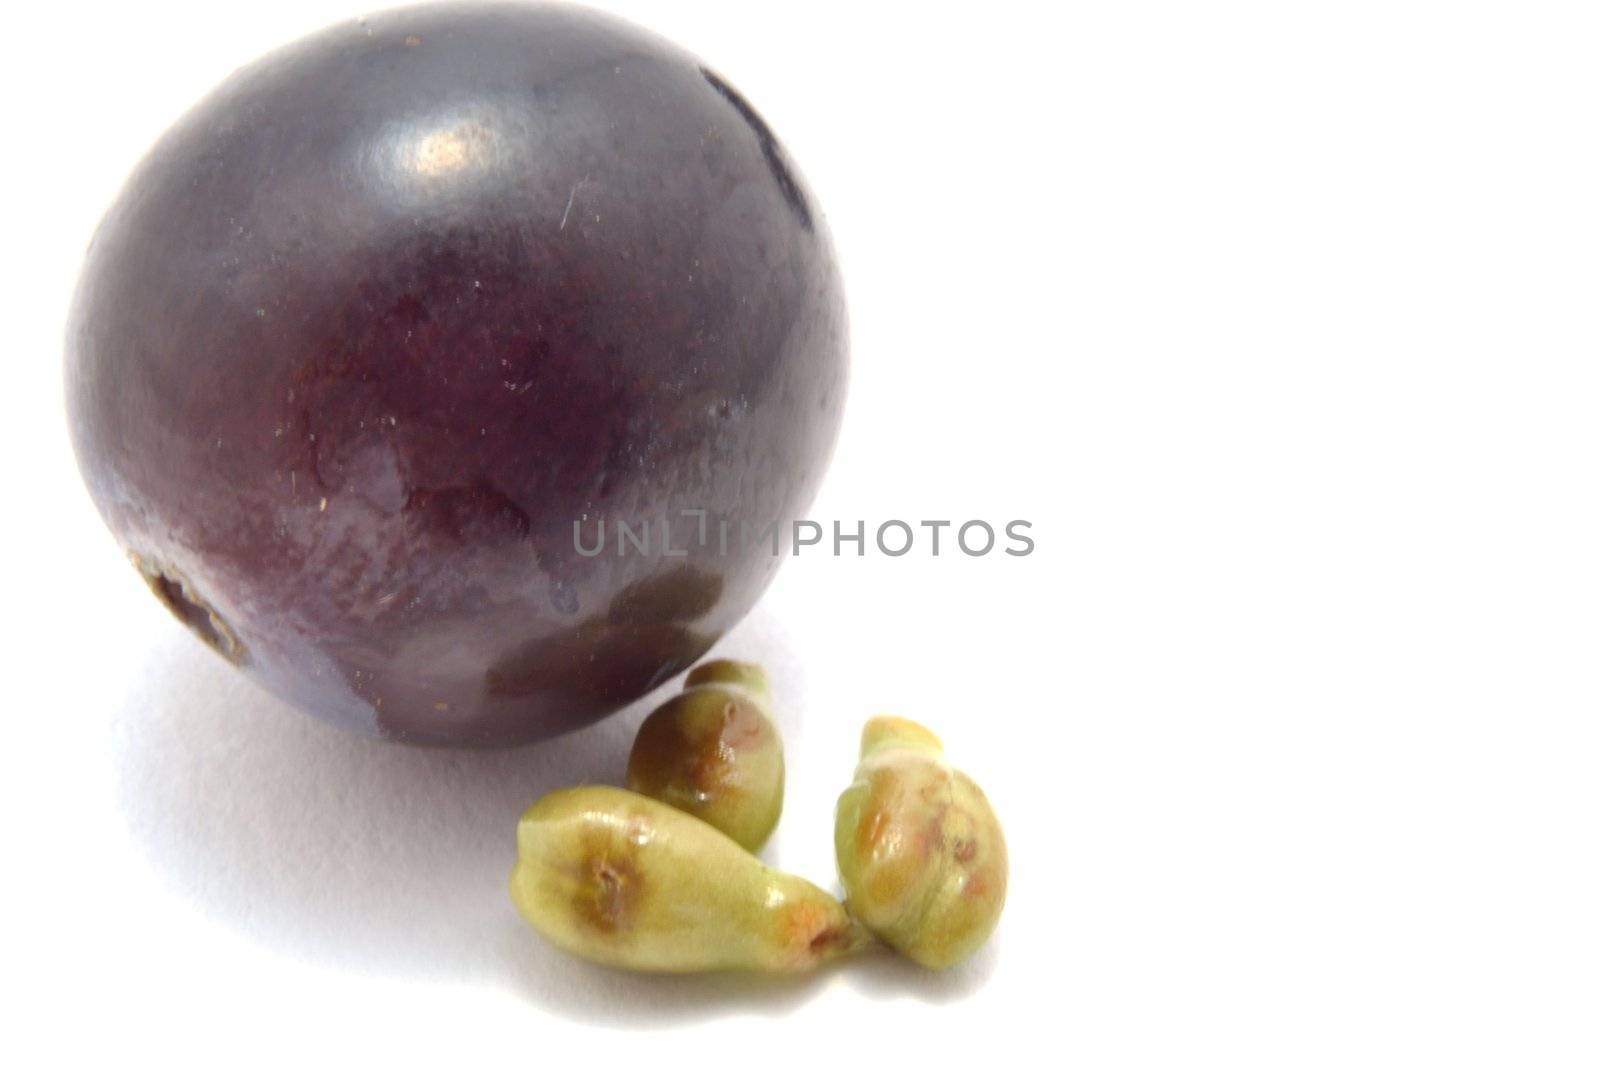 The black grape seeds by Autre